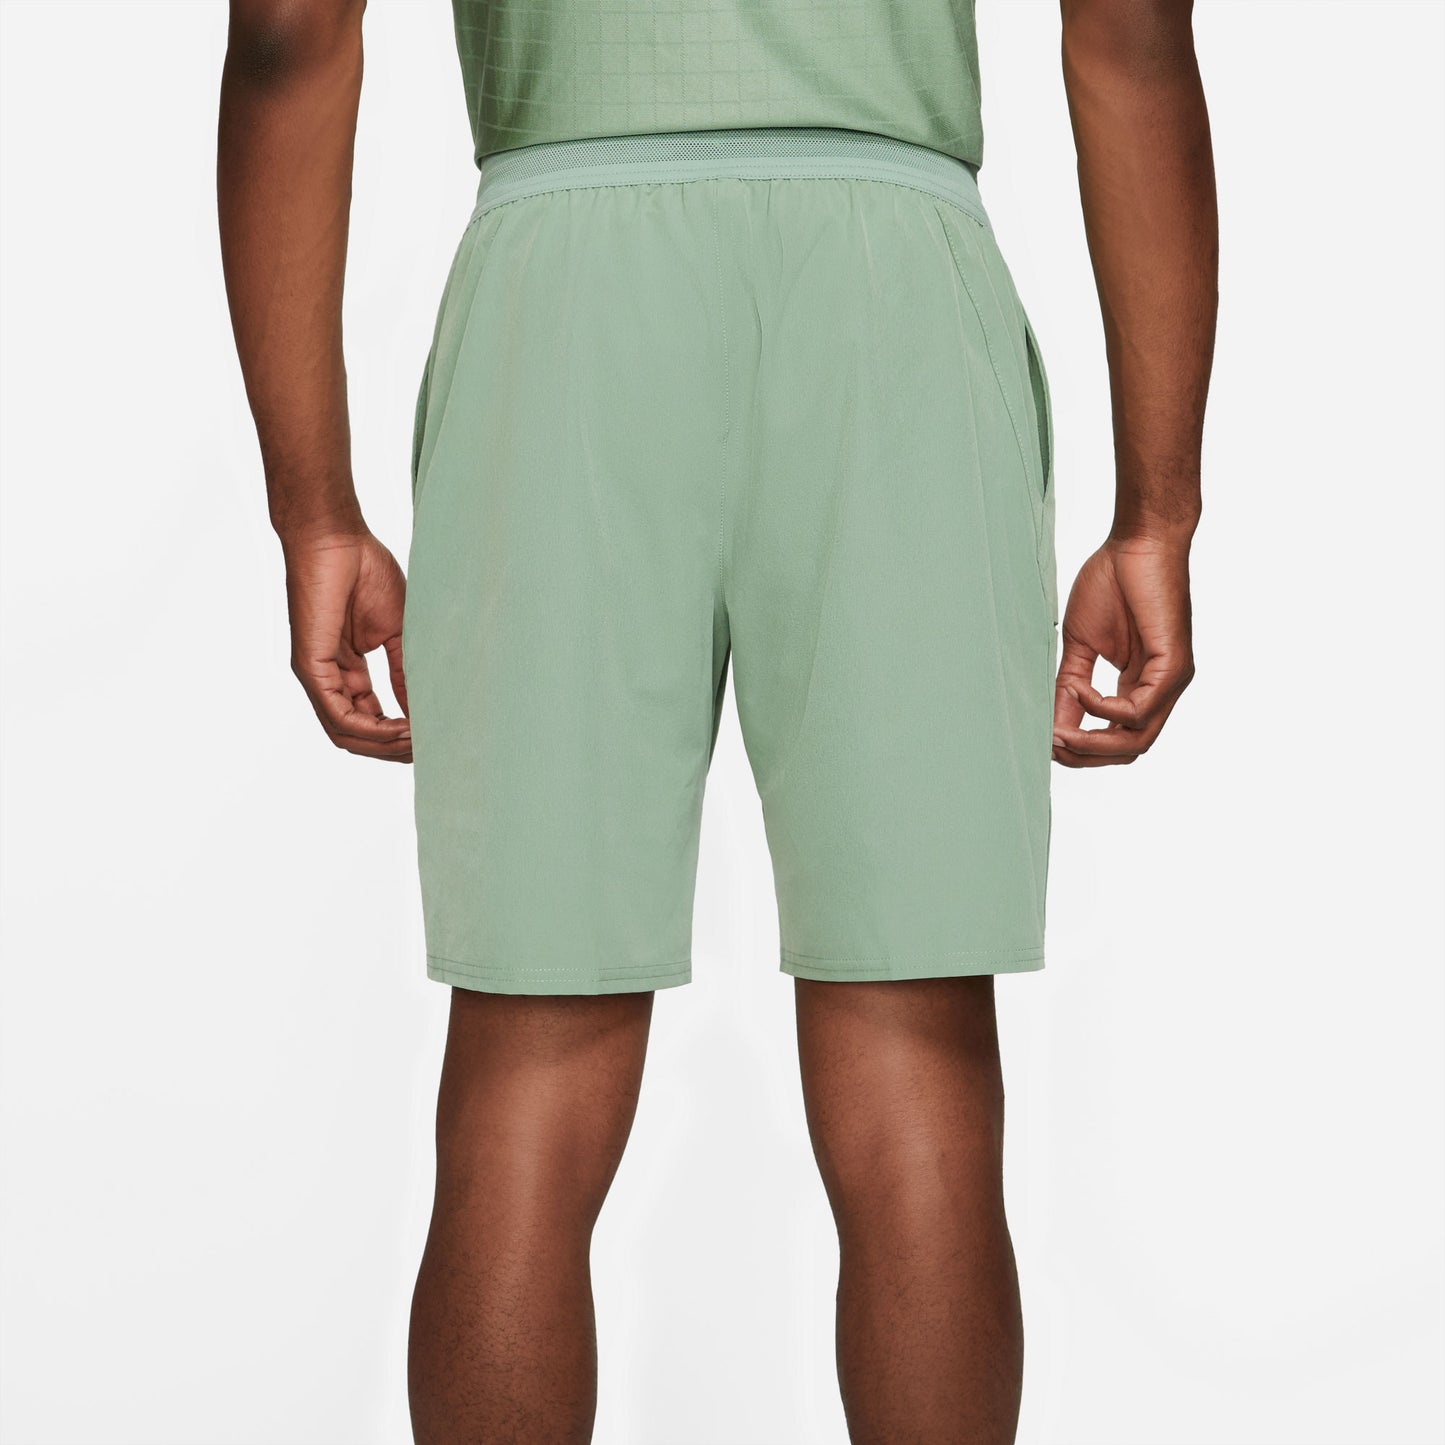 Nike Flex Advantage Men's 9-Inch Tennis Shorts Green (2)